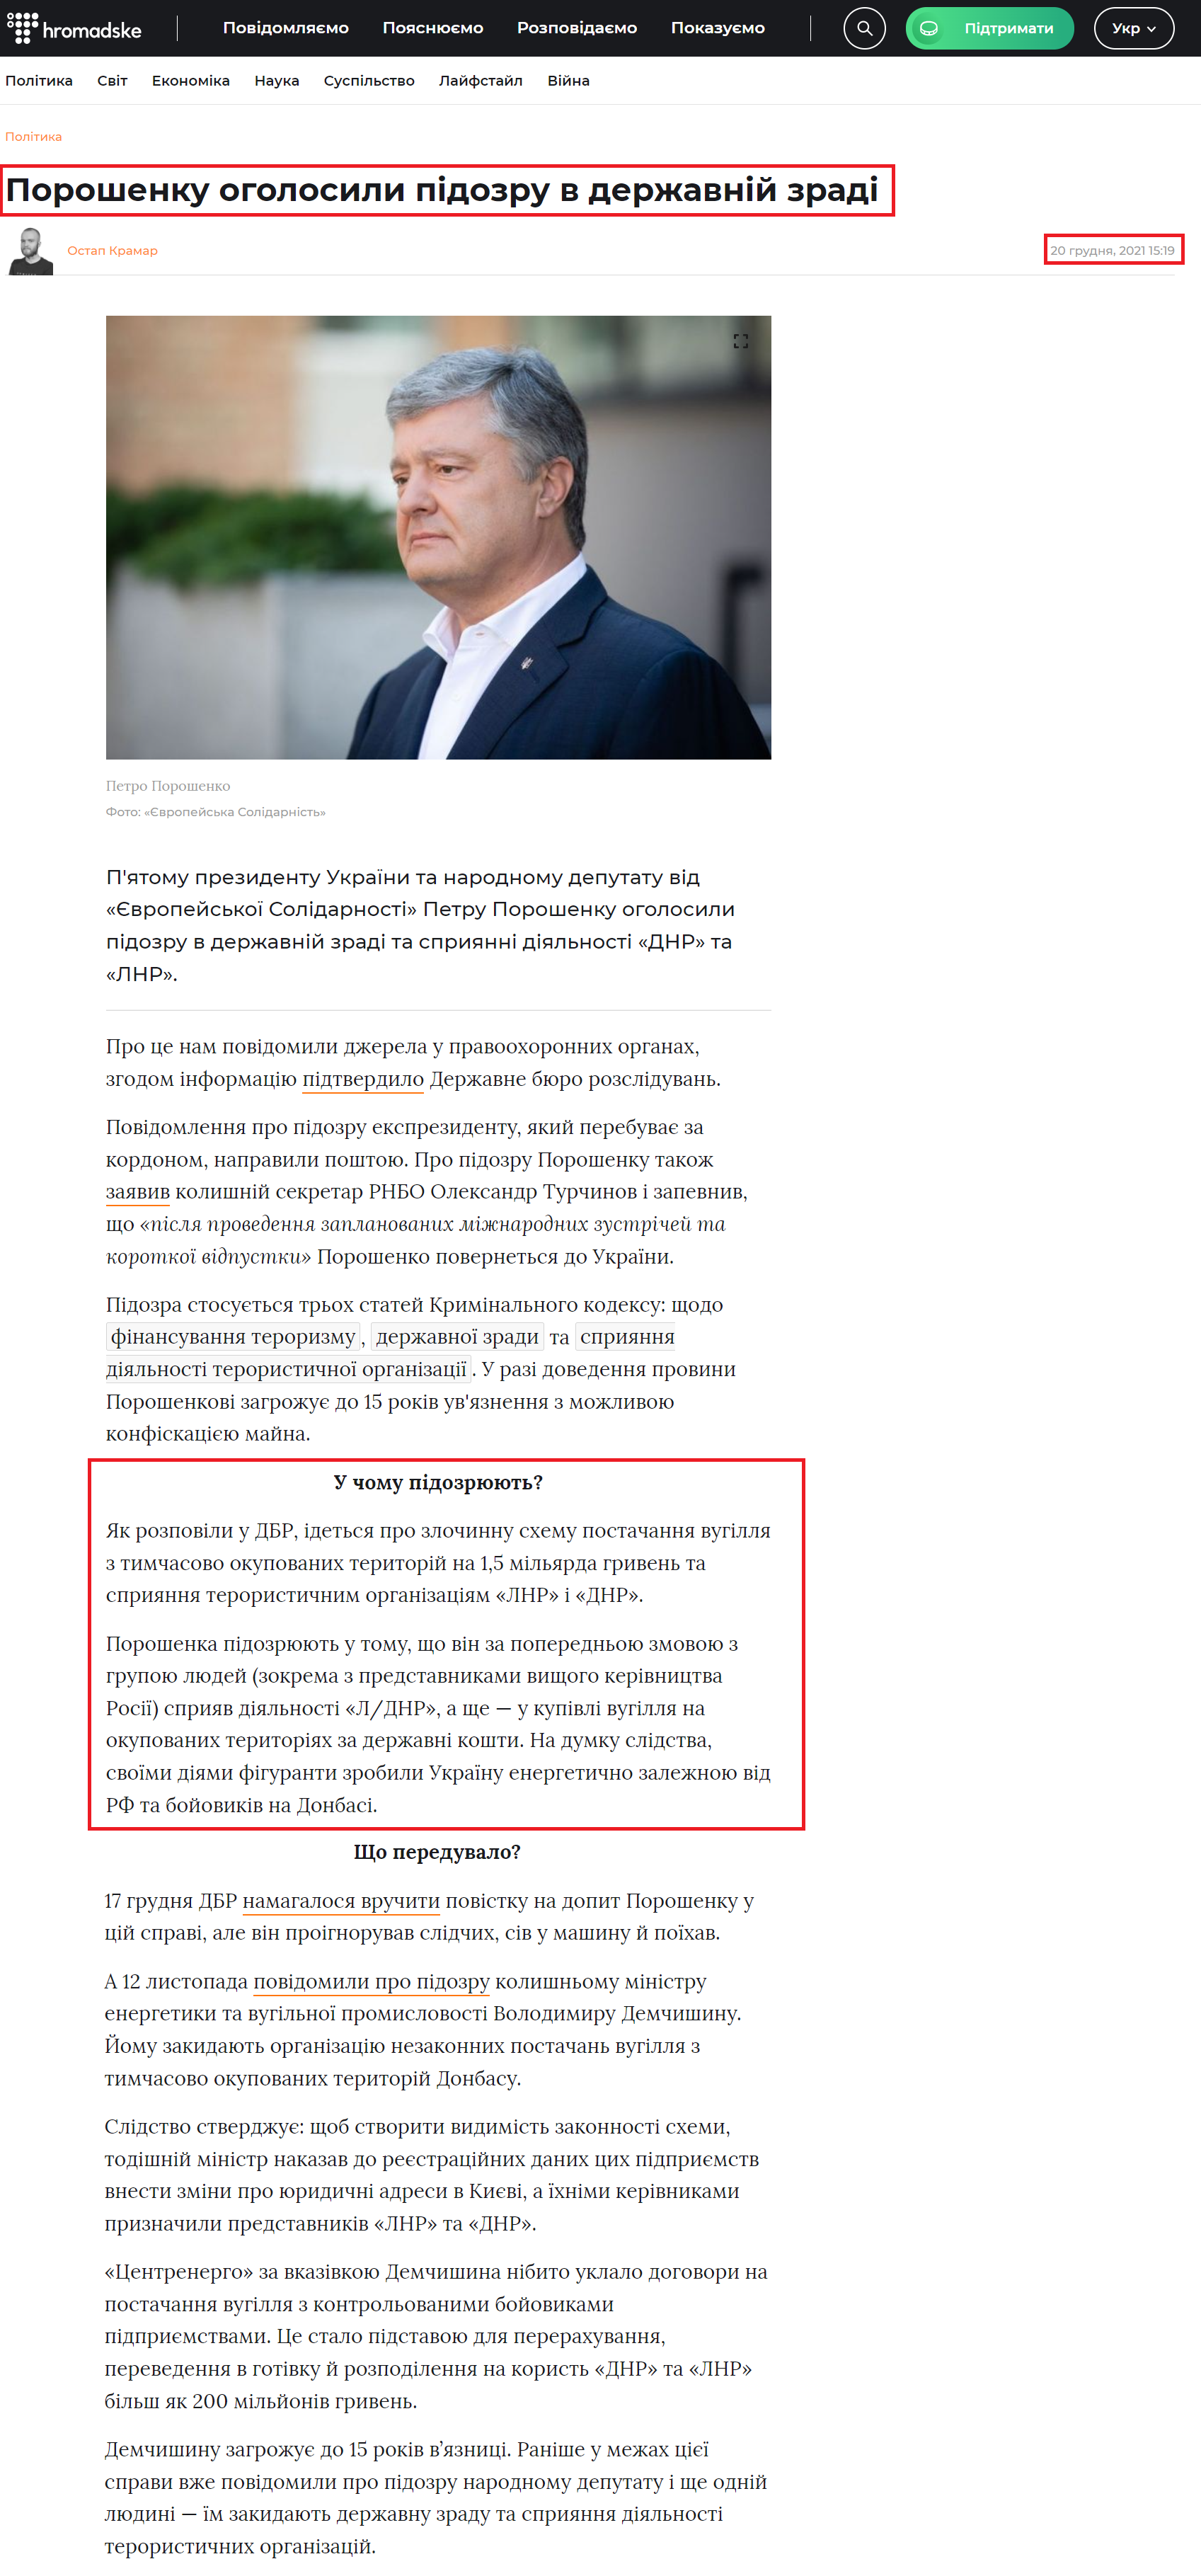 https://hromadske.ua/posts/tisyacha-za-vakcinaciyu-ukrayinci-za-dva-dni-vitratili-134-mln-grn